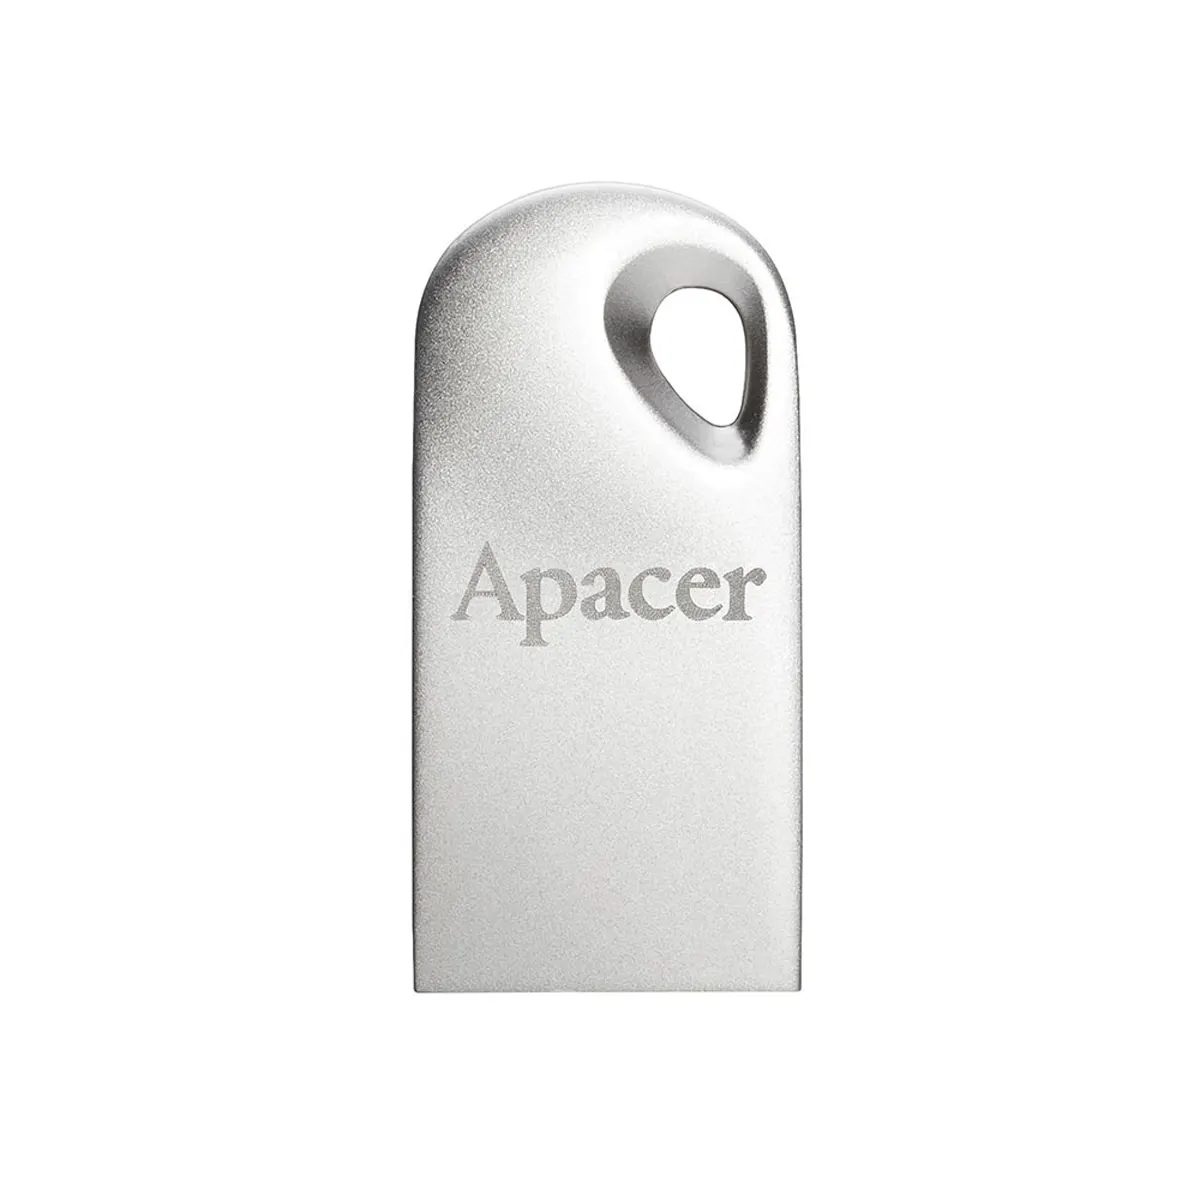 فلش مموری اپیسر Apacer AH11K USB 2.0